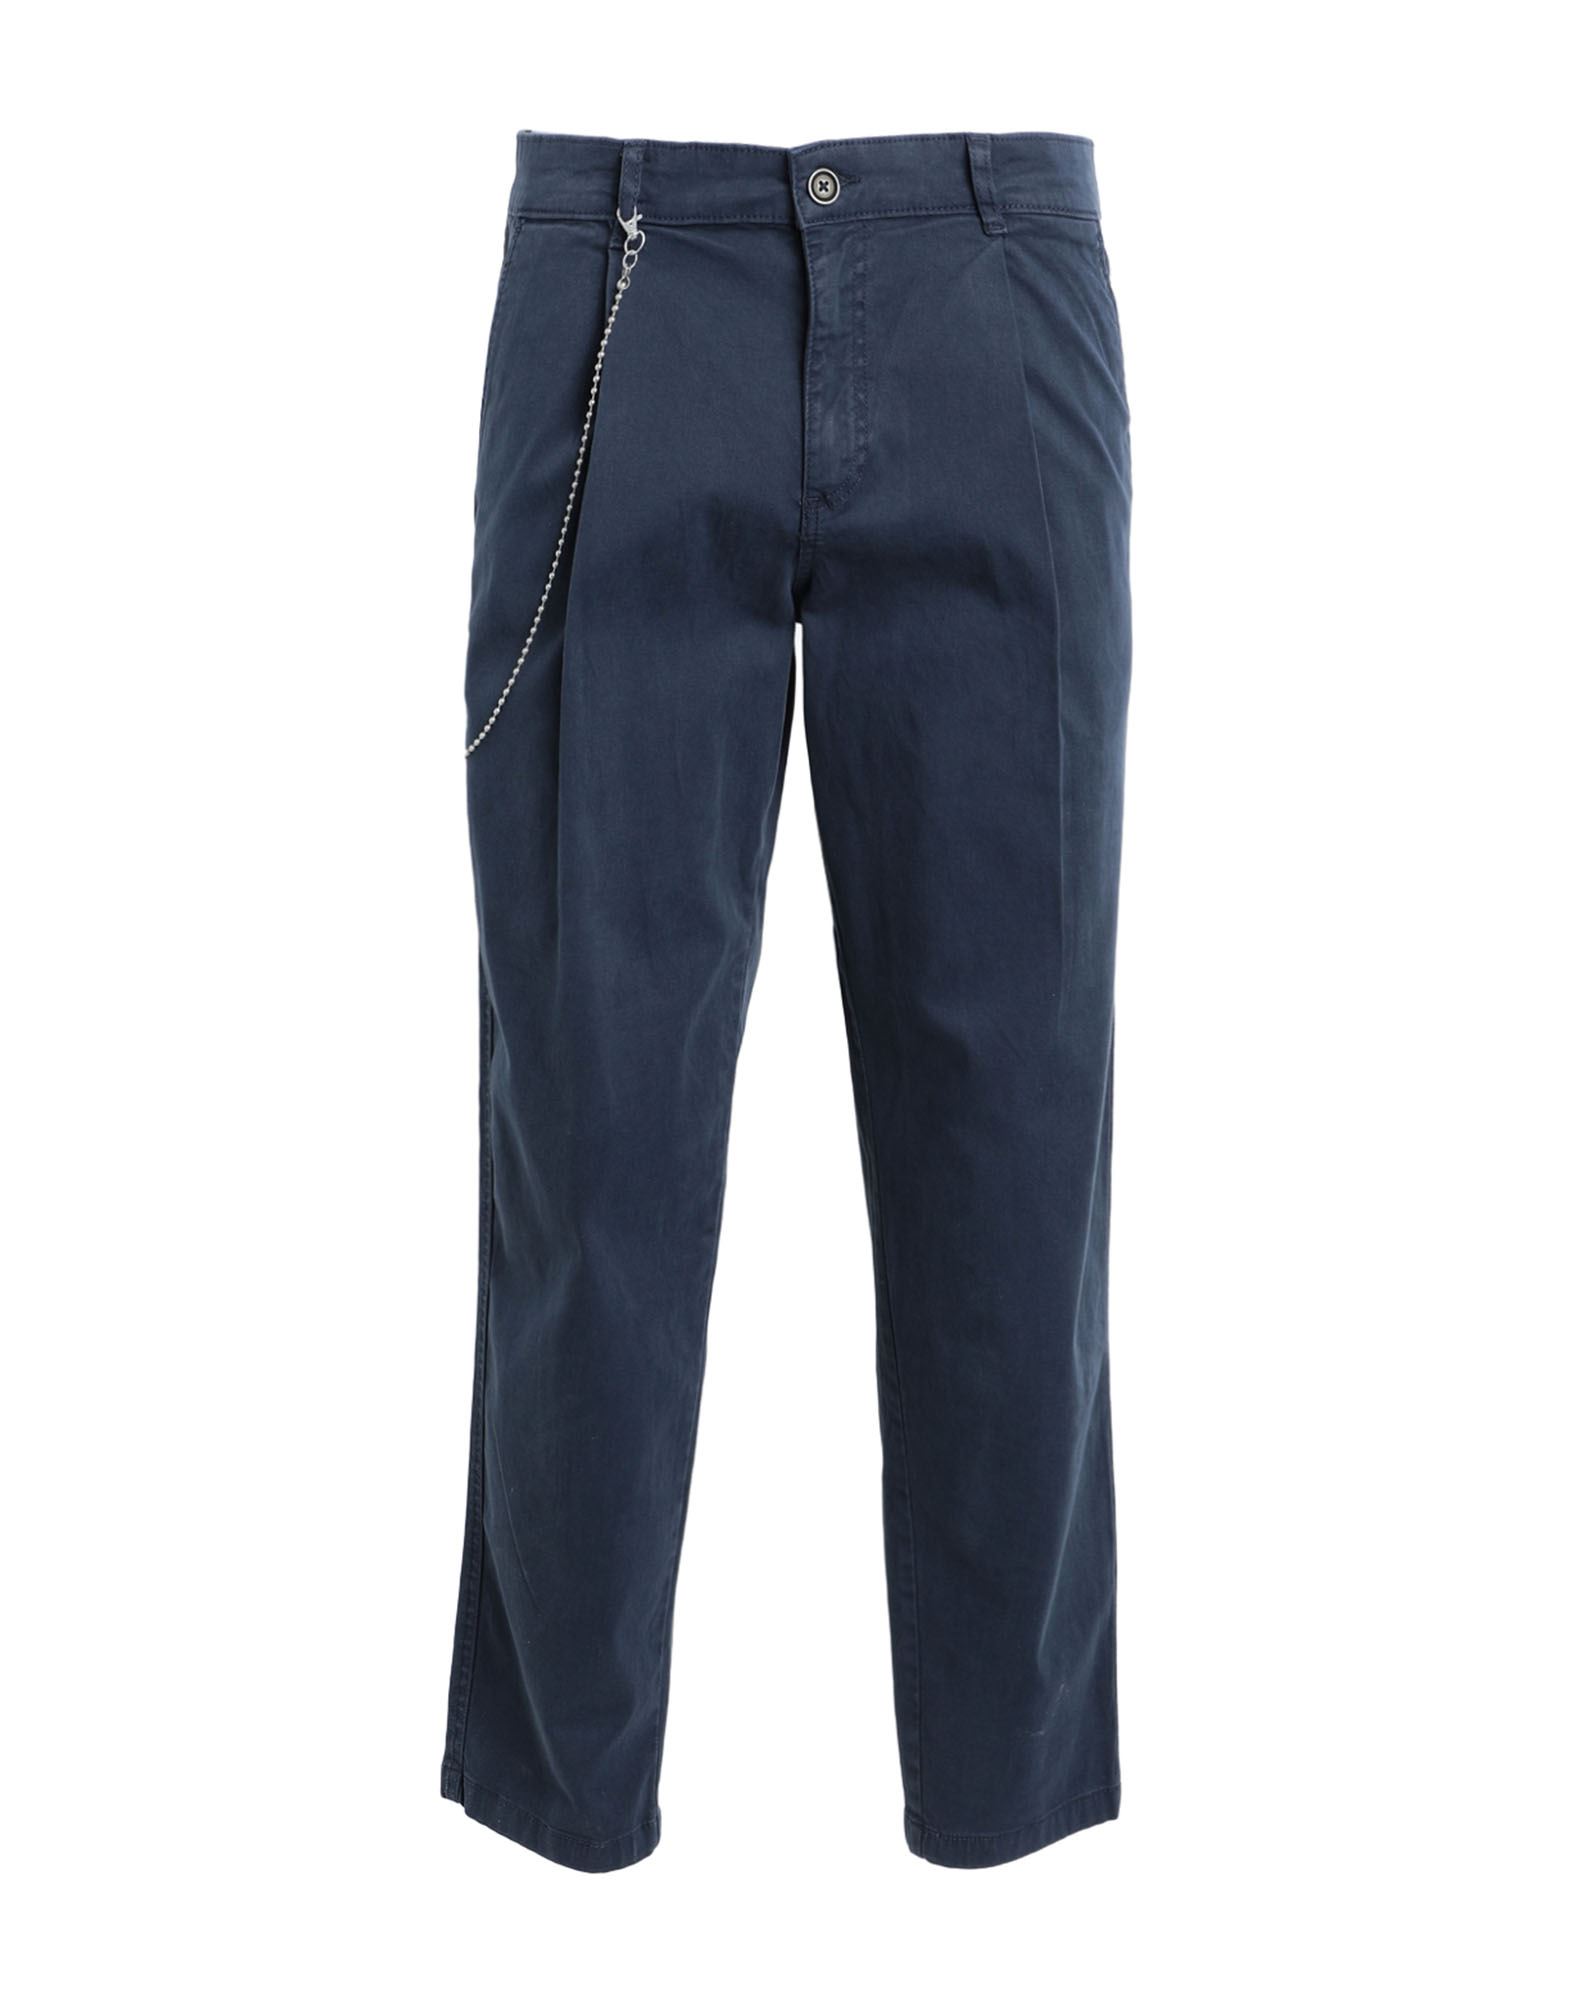 Jack & Jones Man Pants Navy Blue Size 34w-32l Cotton, Elastane